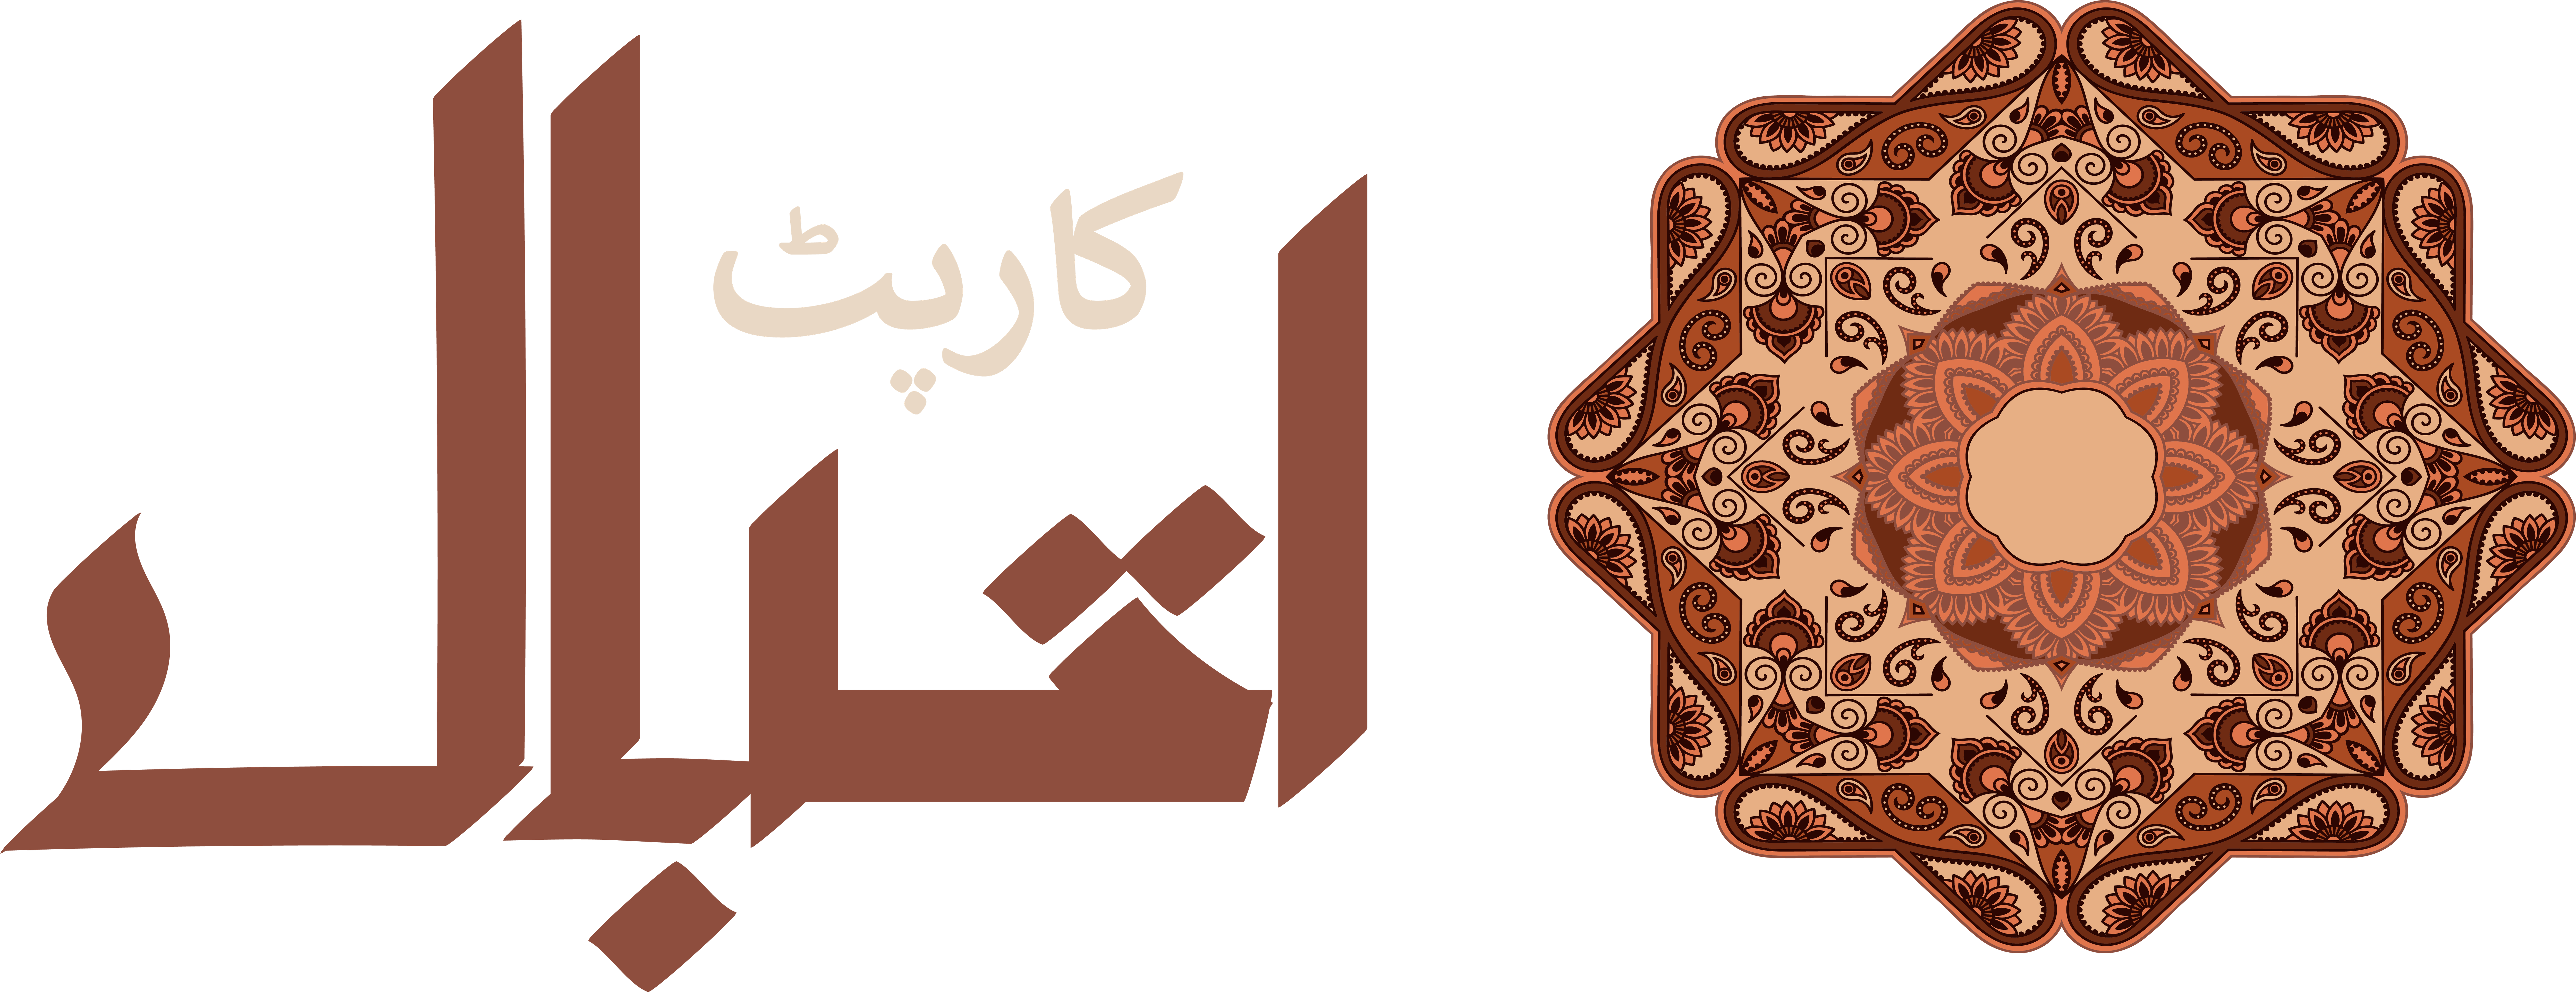 Iqbal carpets